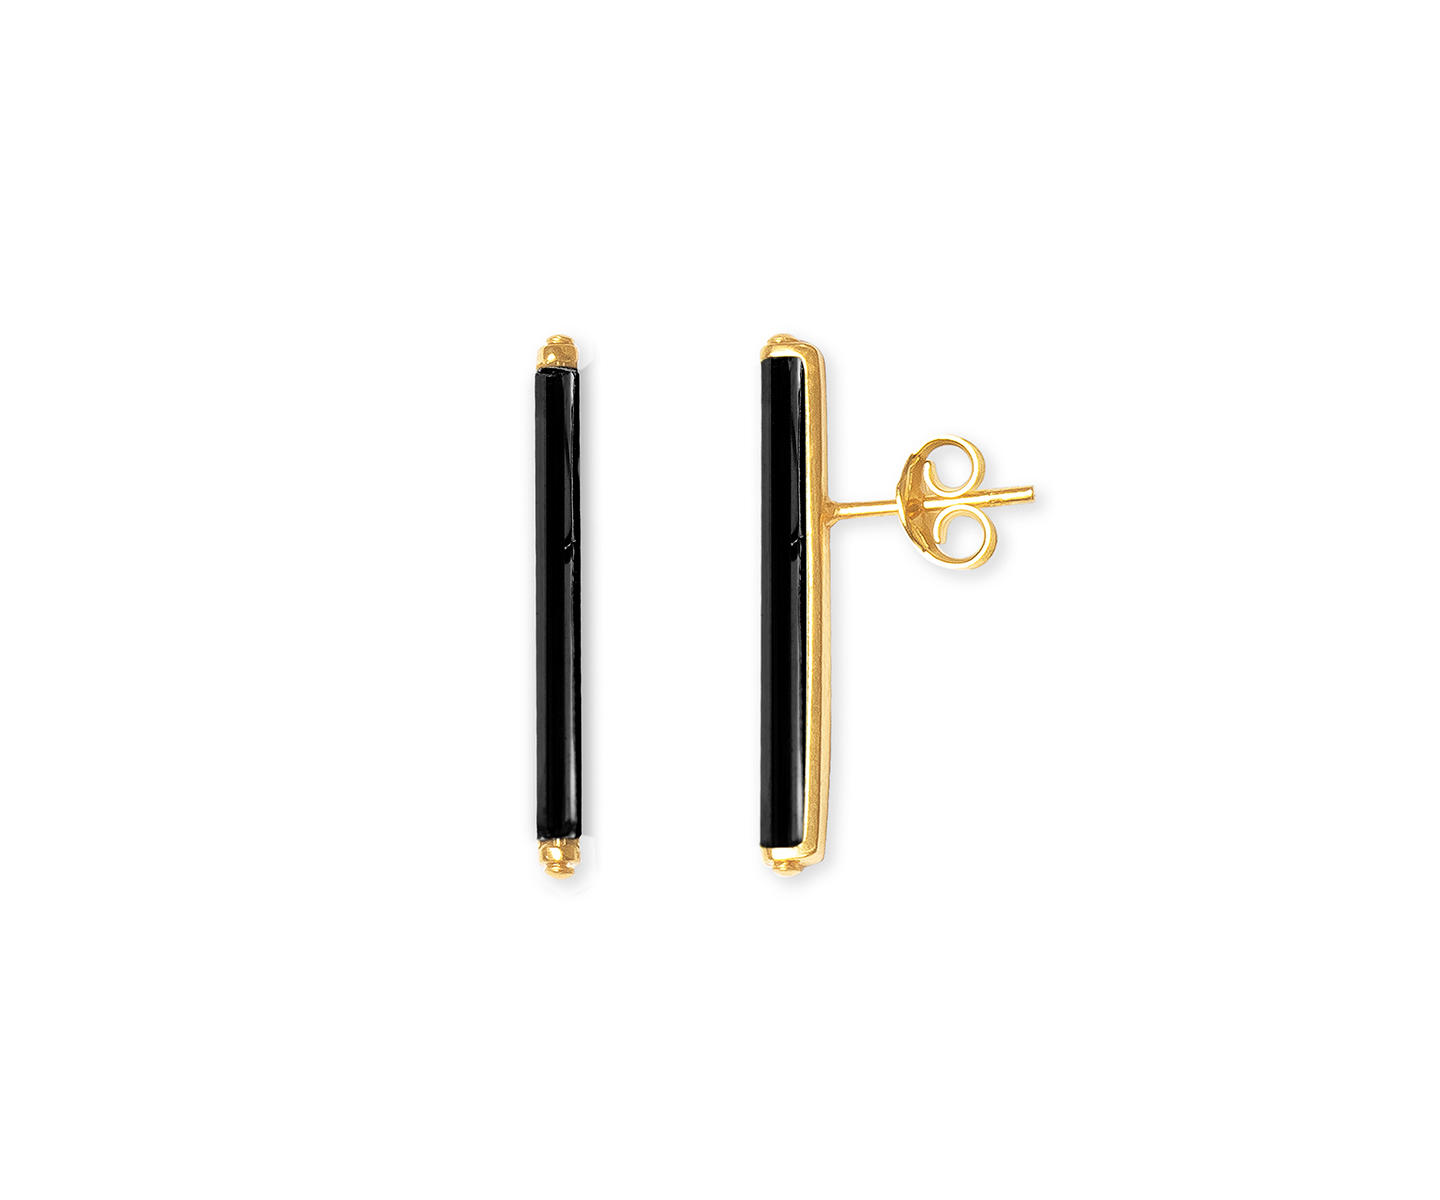 Bar minimalist earrings set with black vintage glass